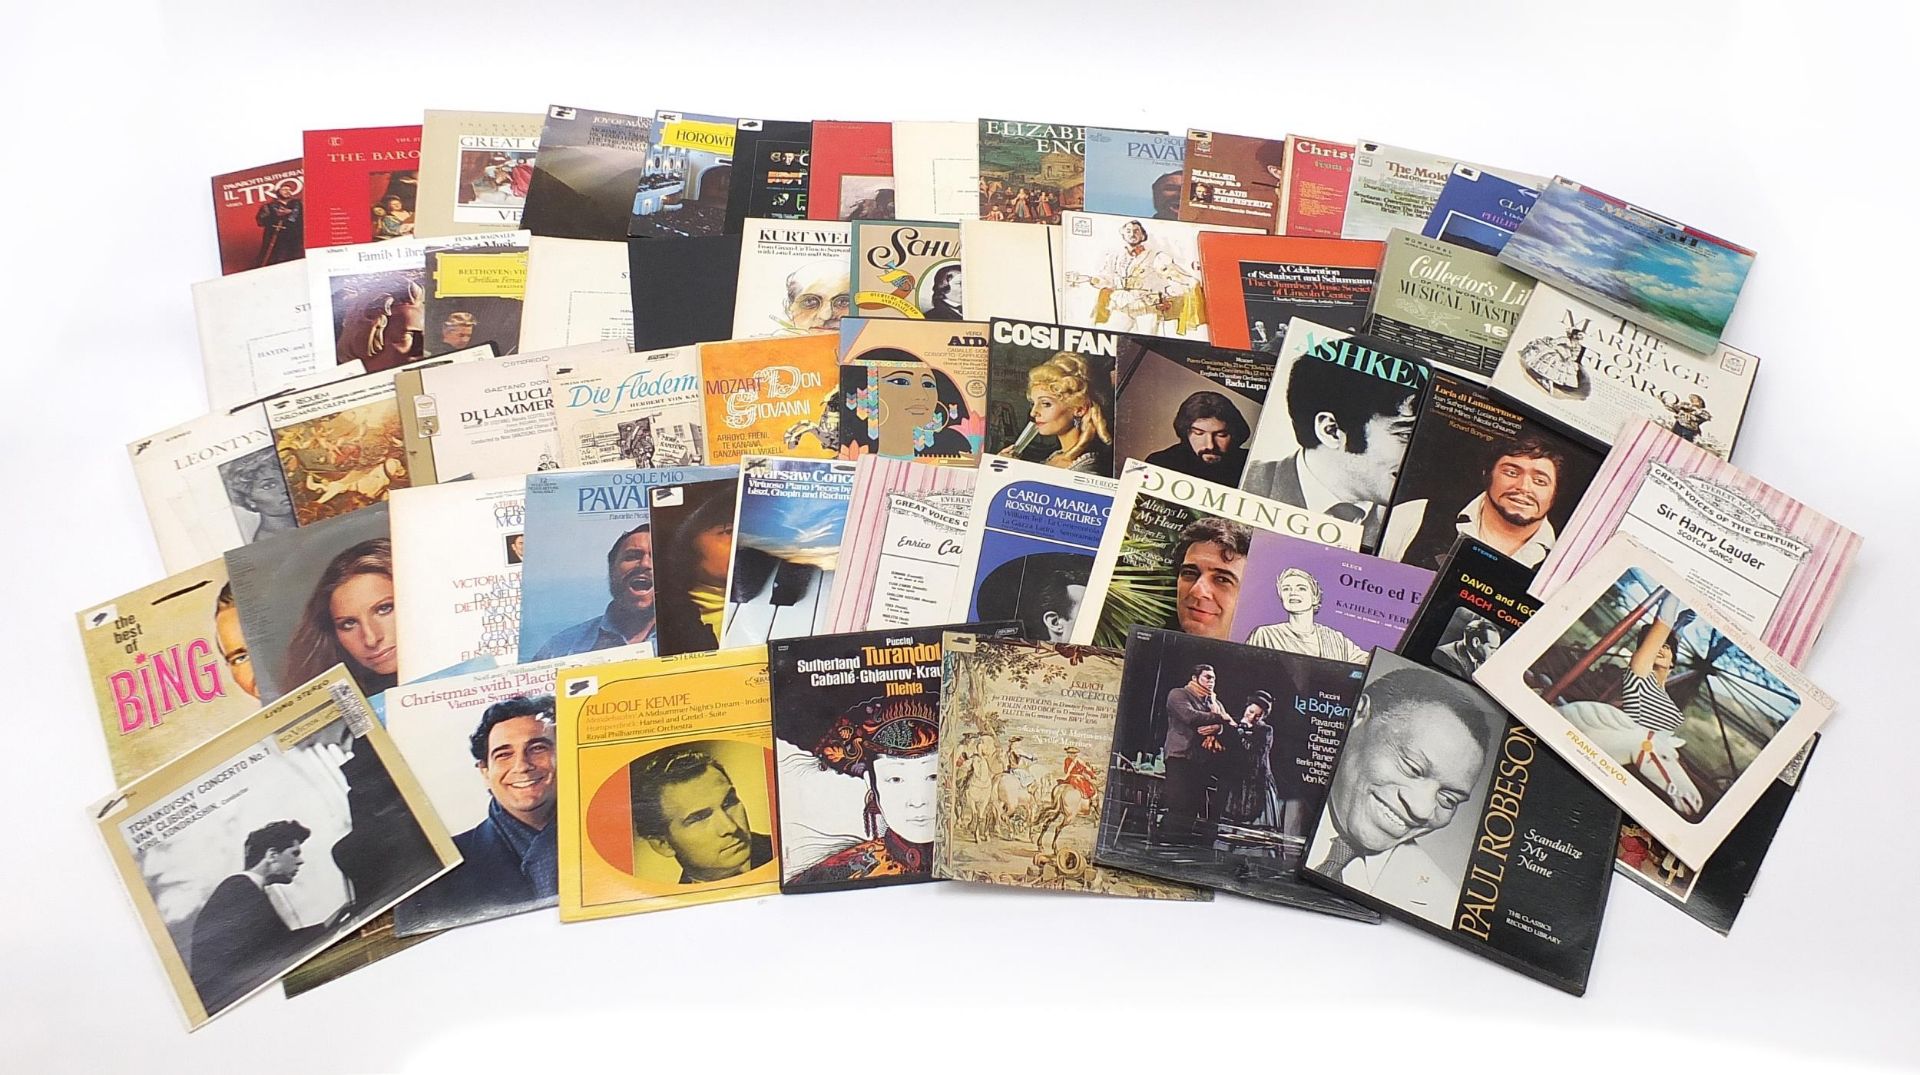 Vinyl LP's, including box sets, opera, Don Giovani and Pavarotti